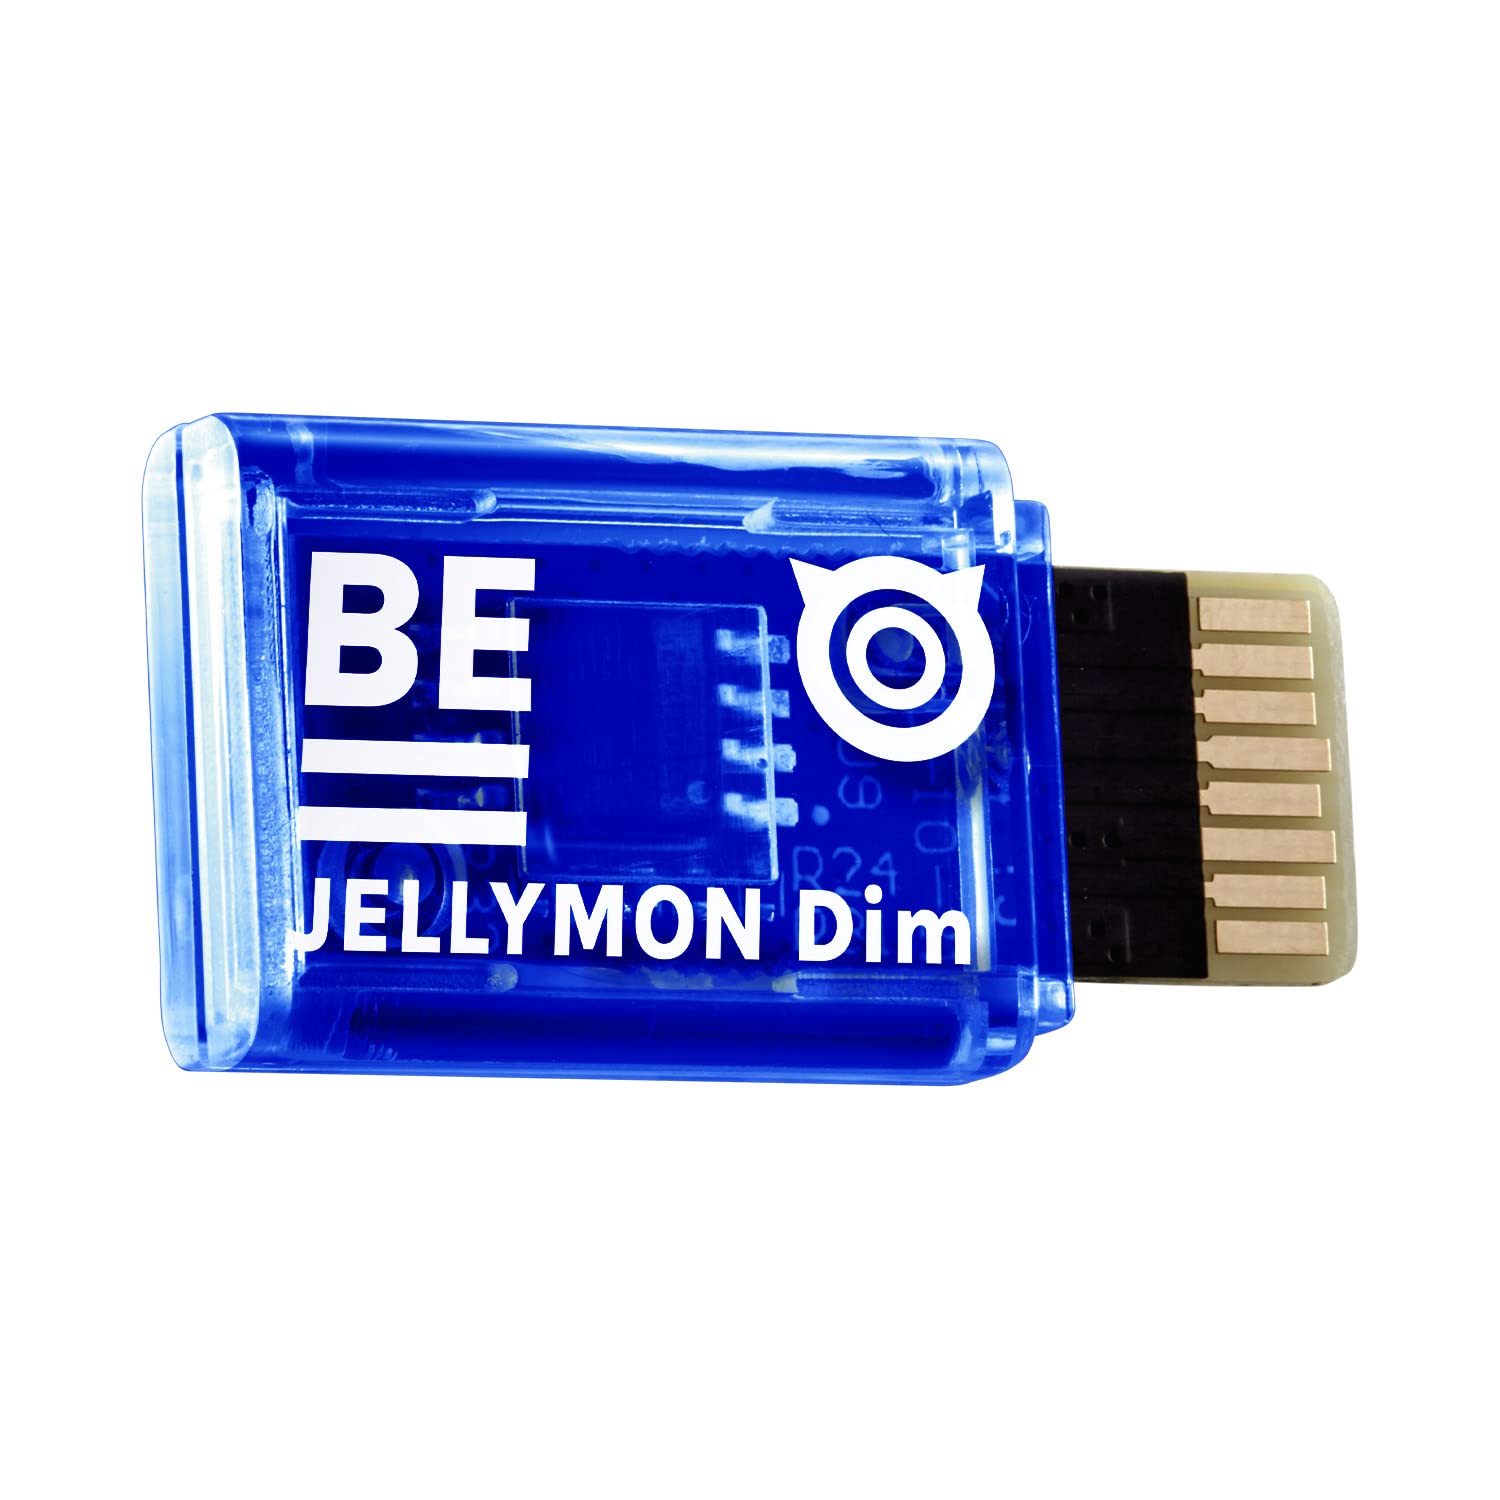 jellymondim5_december15_2022.jpg